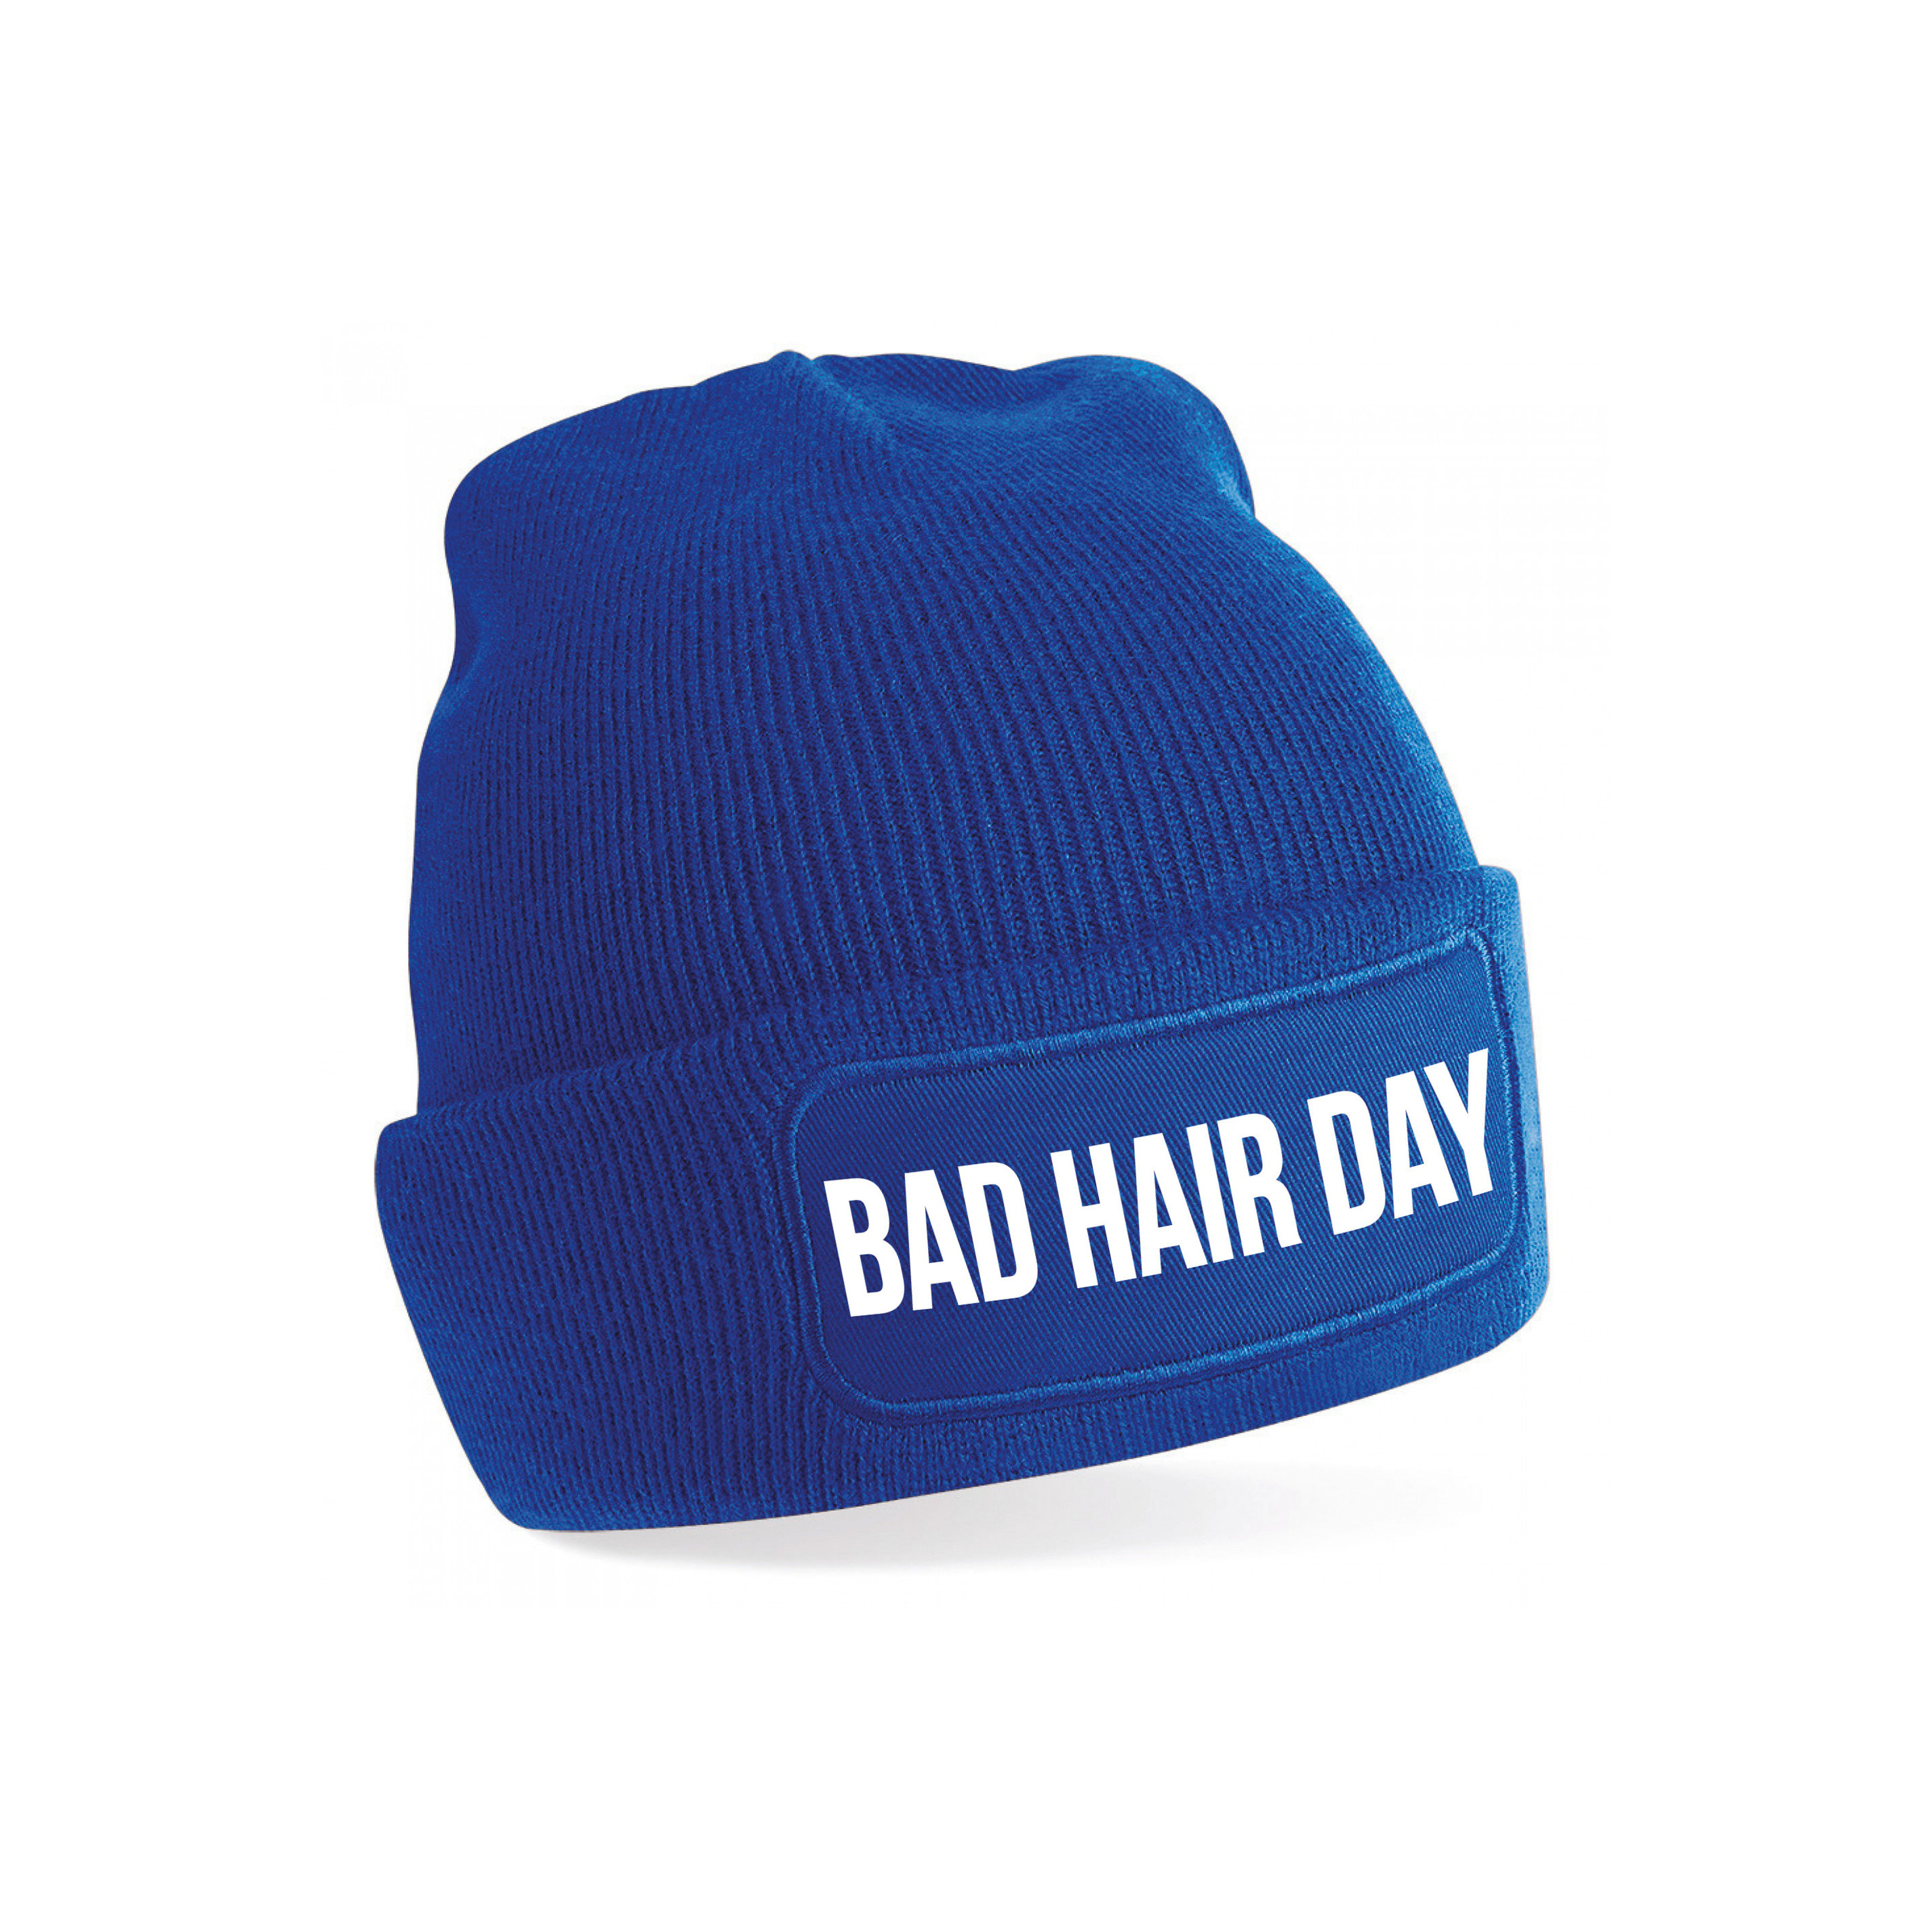 Bad hair day muts unisex one size Blauw